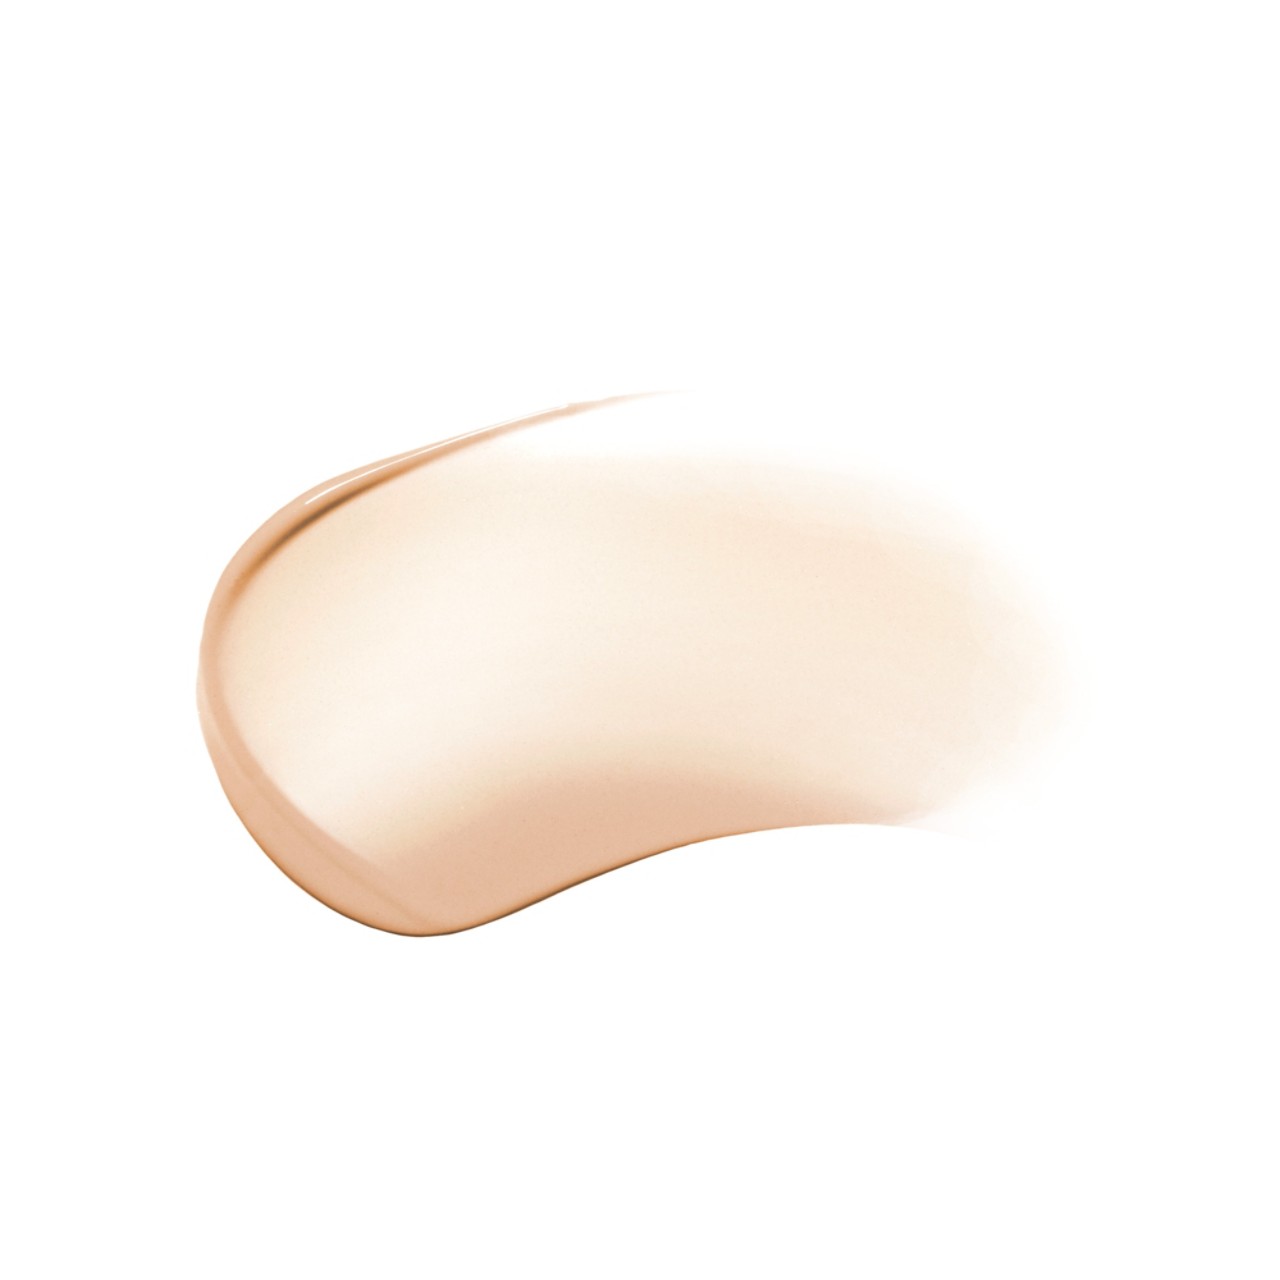 COVERGIRL Smoothers Lightweight BB Cream, 810 Light to Medium, 1.35 fl oz - image 3 of 10